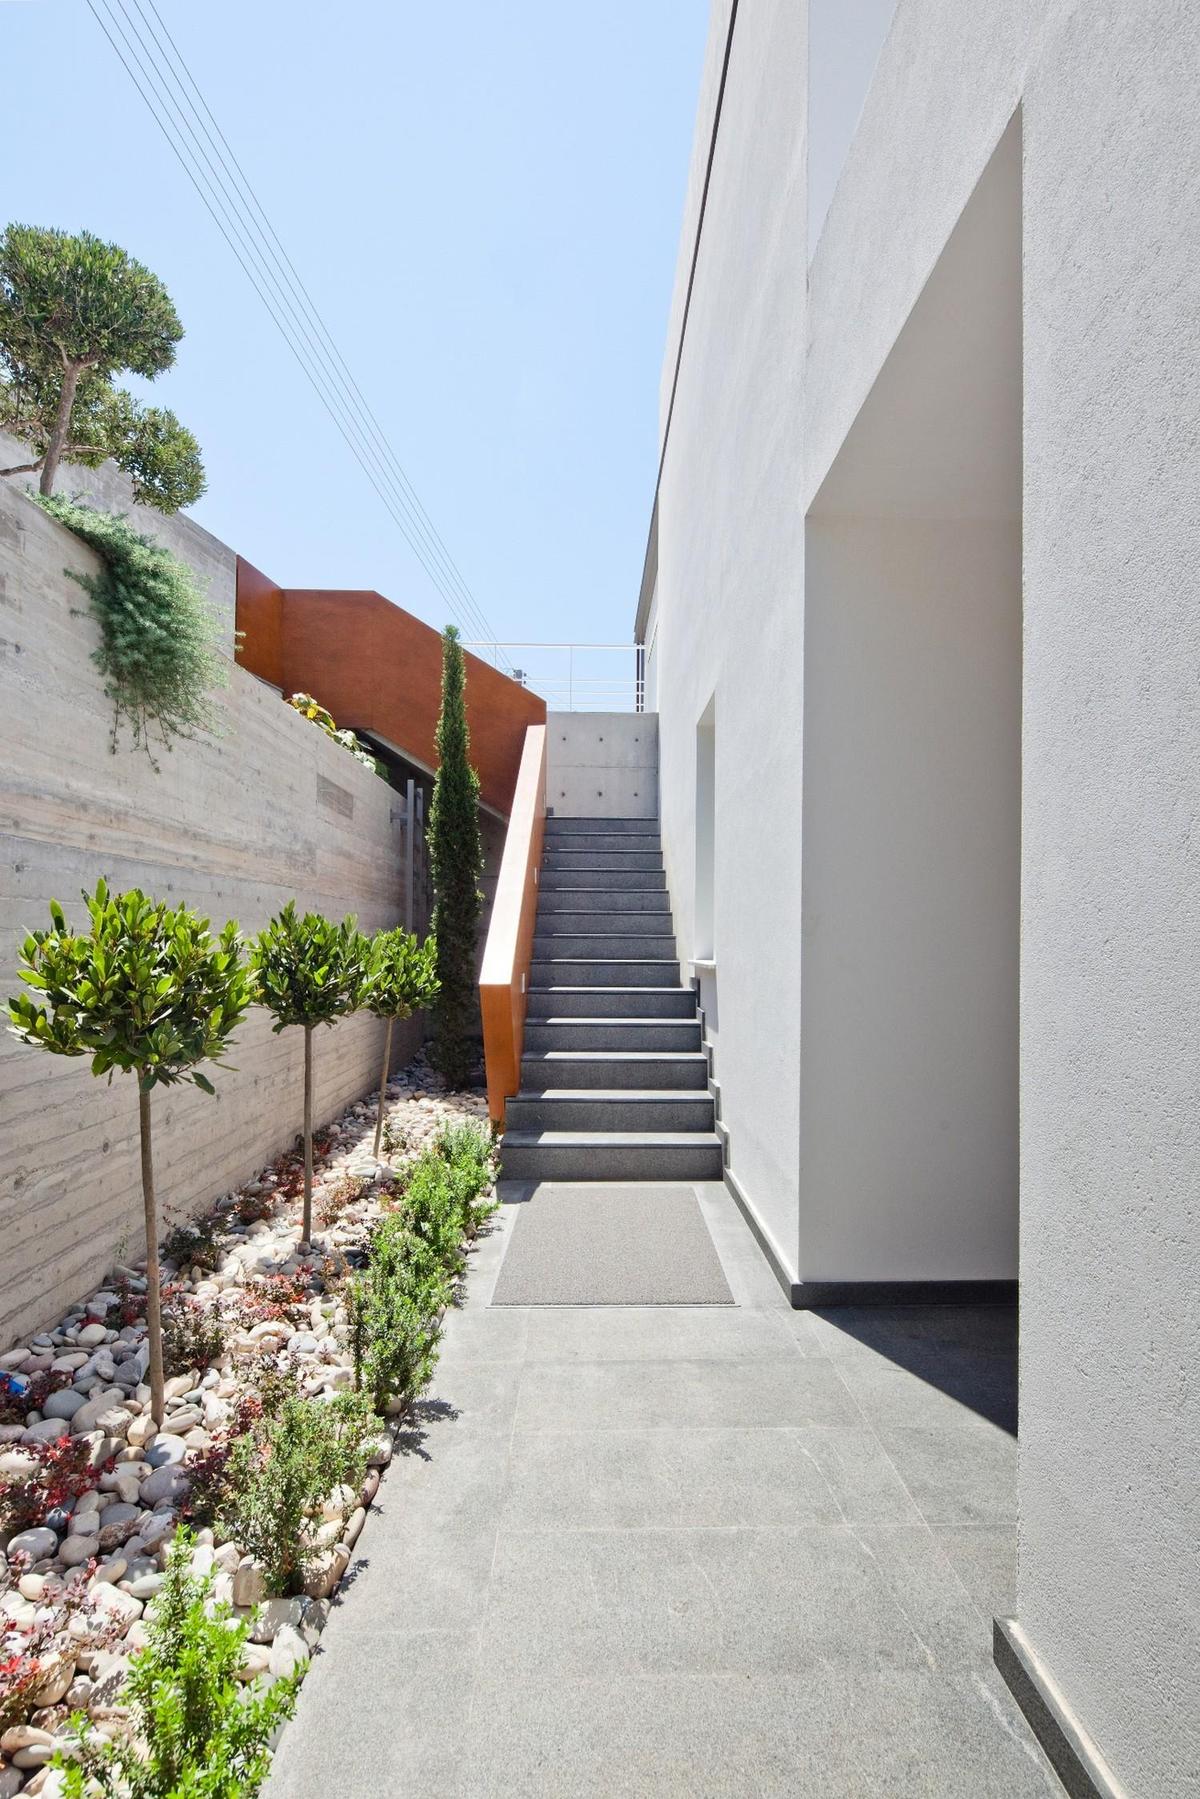 slope-home-steps-down-street-level-rooftop-garage-7.jpg